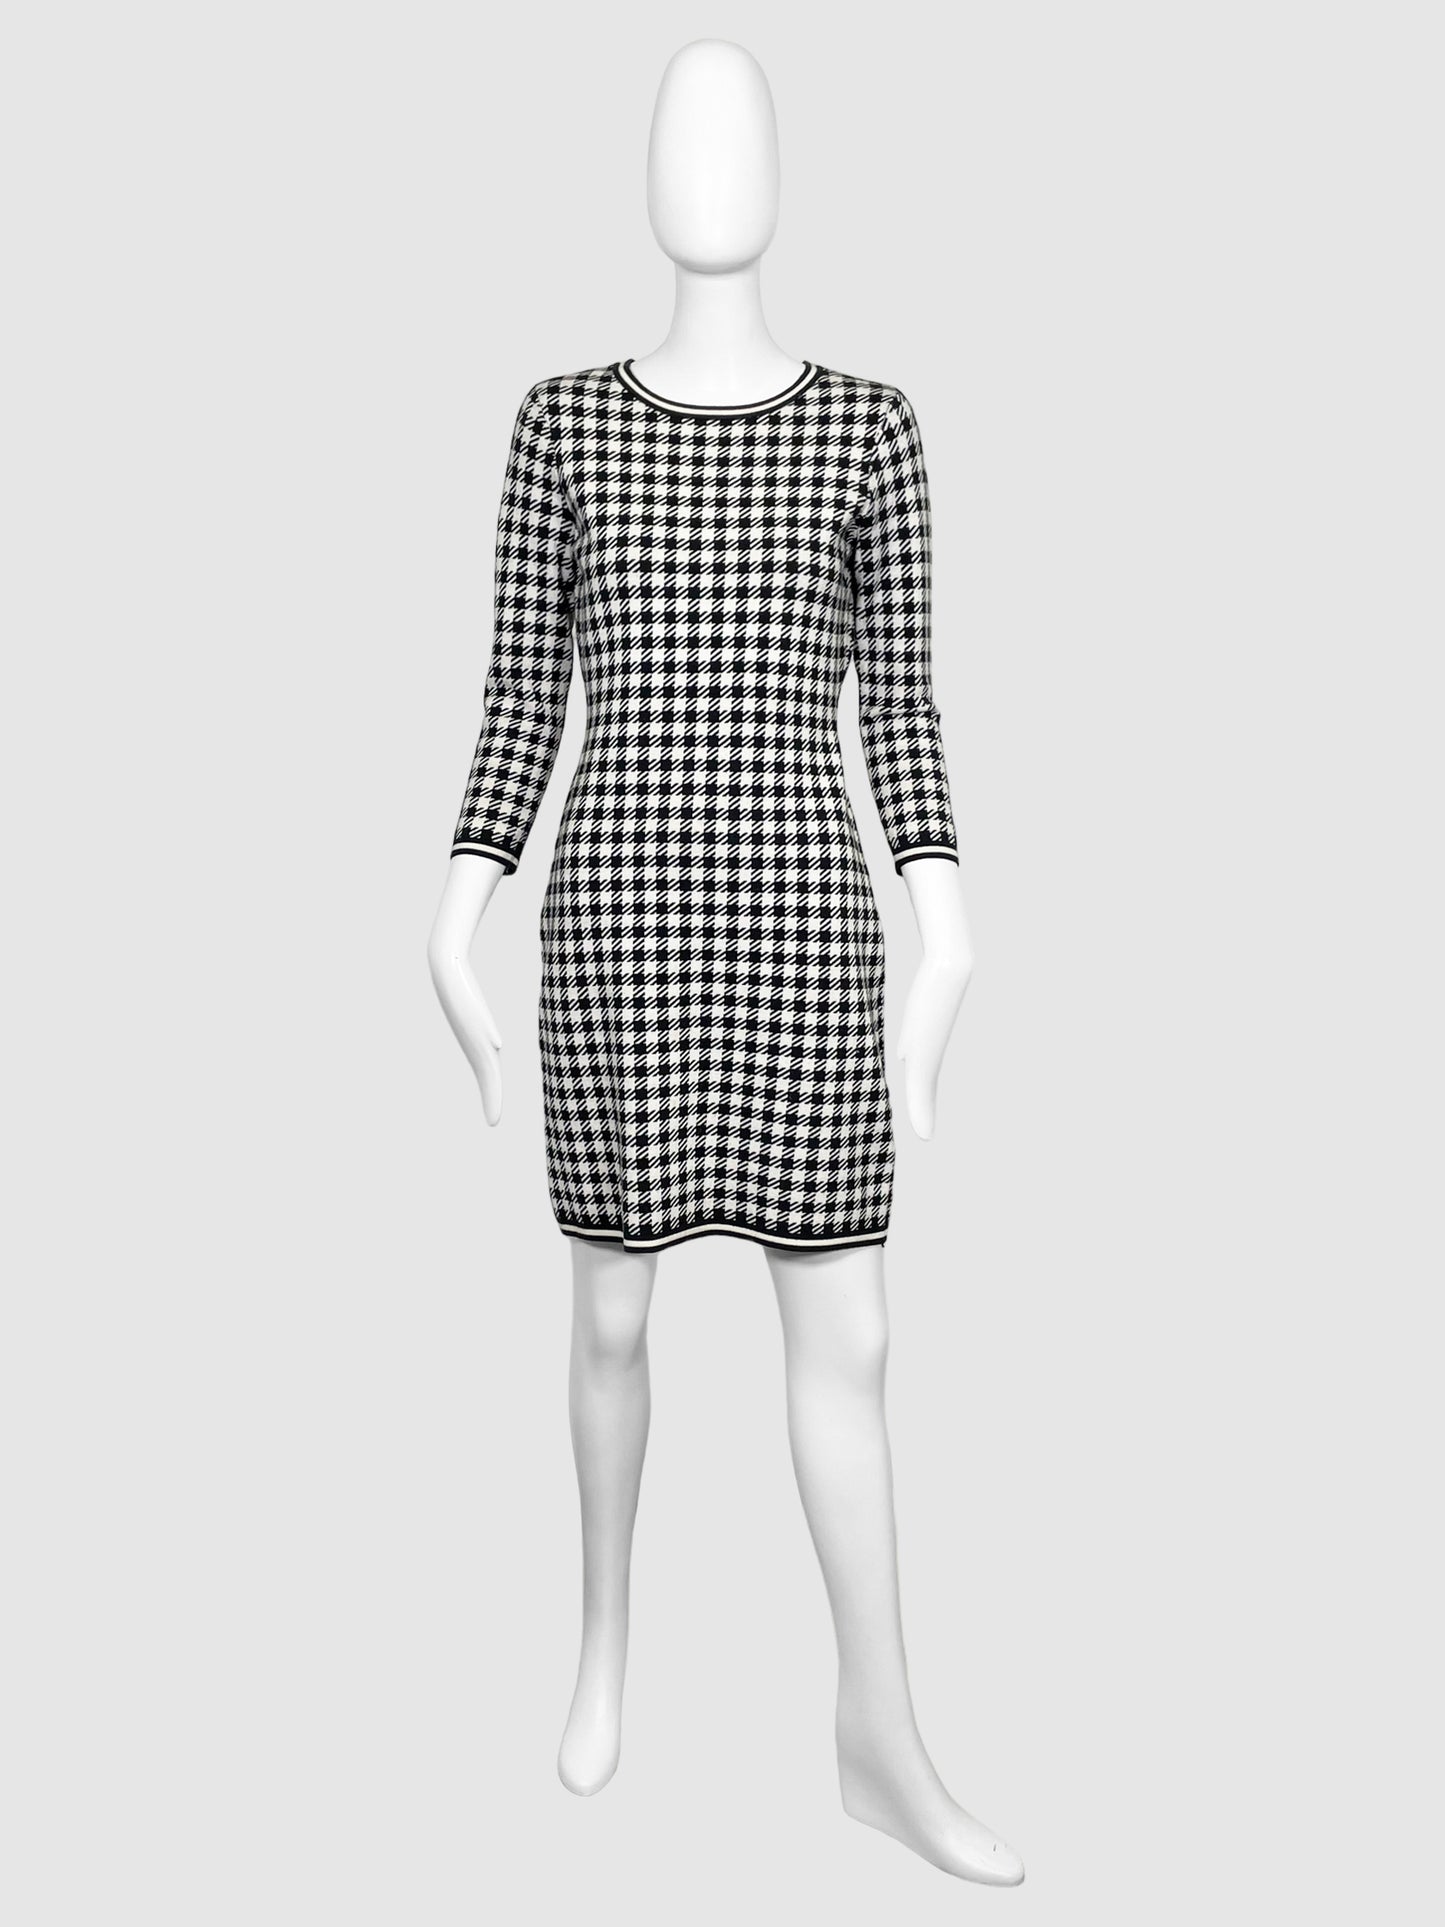 Ralph Lauren Houndstooth Print Dress - Size S